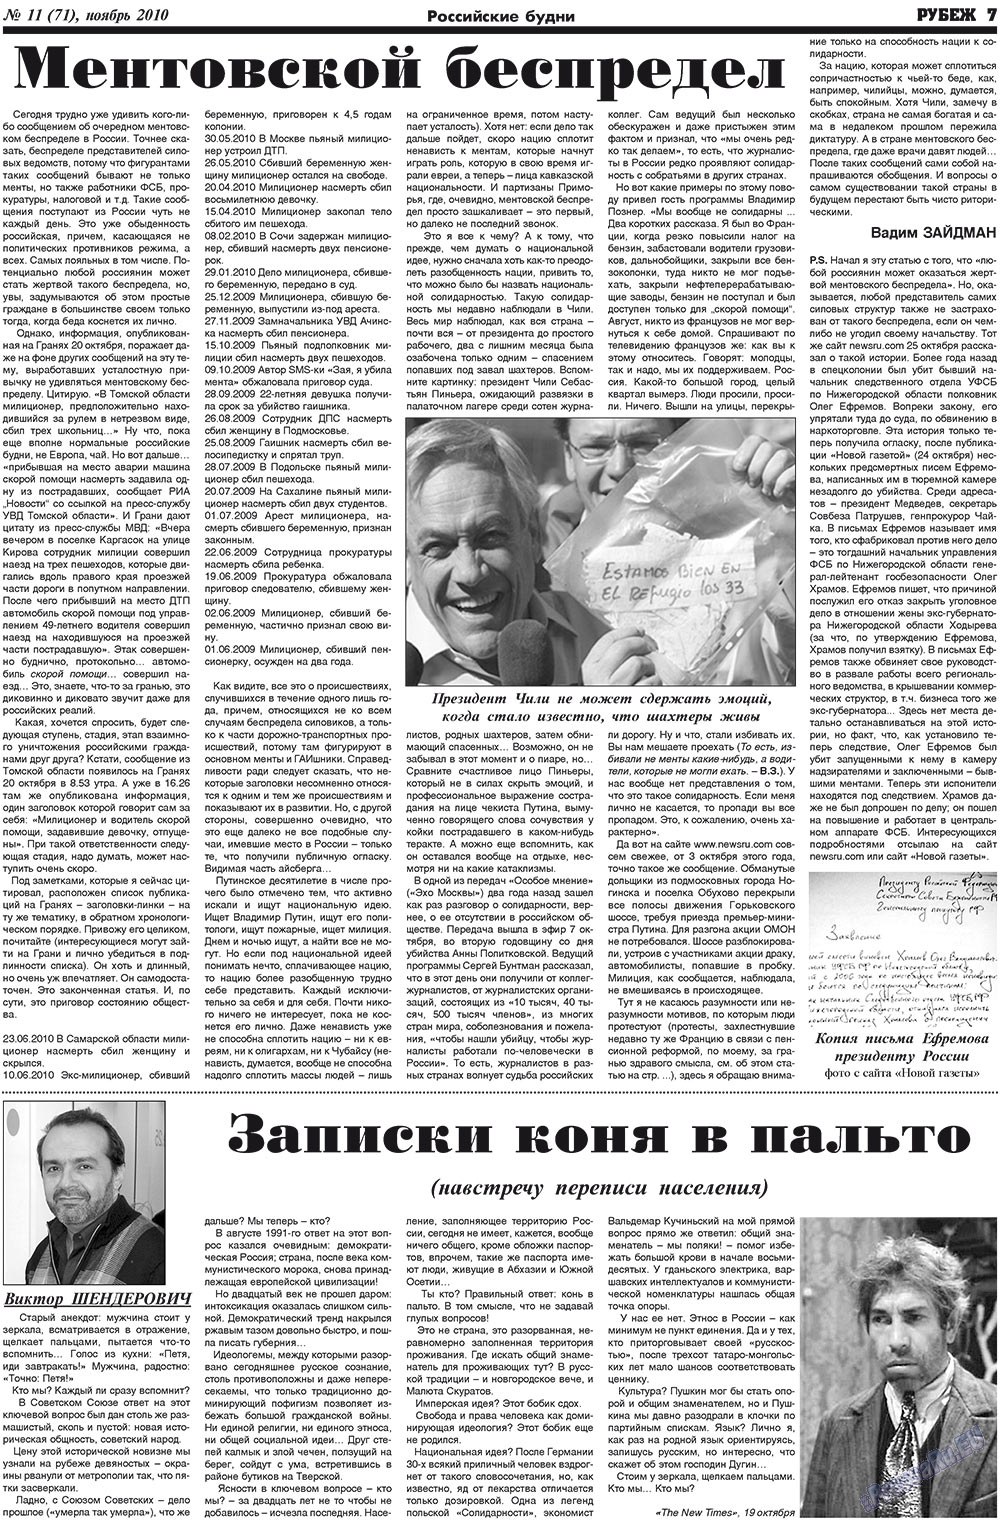 Рубеж, газета. 2010 №11 стр.7